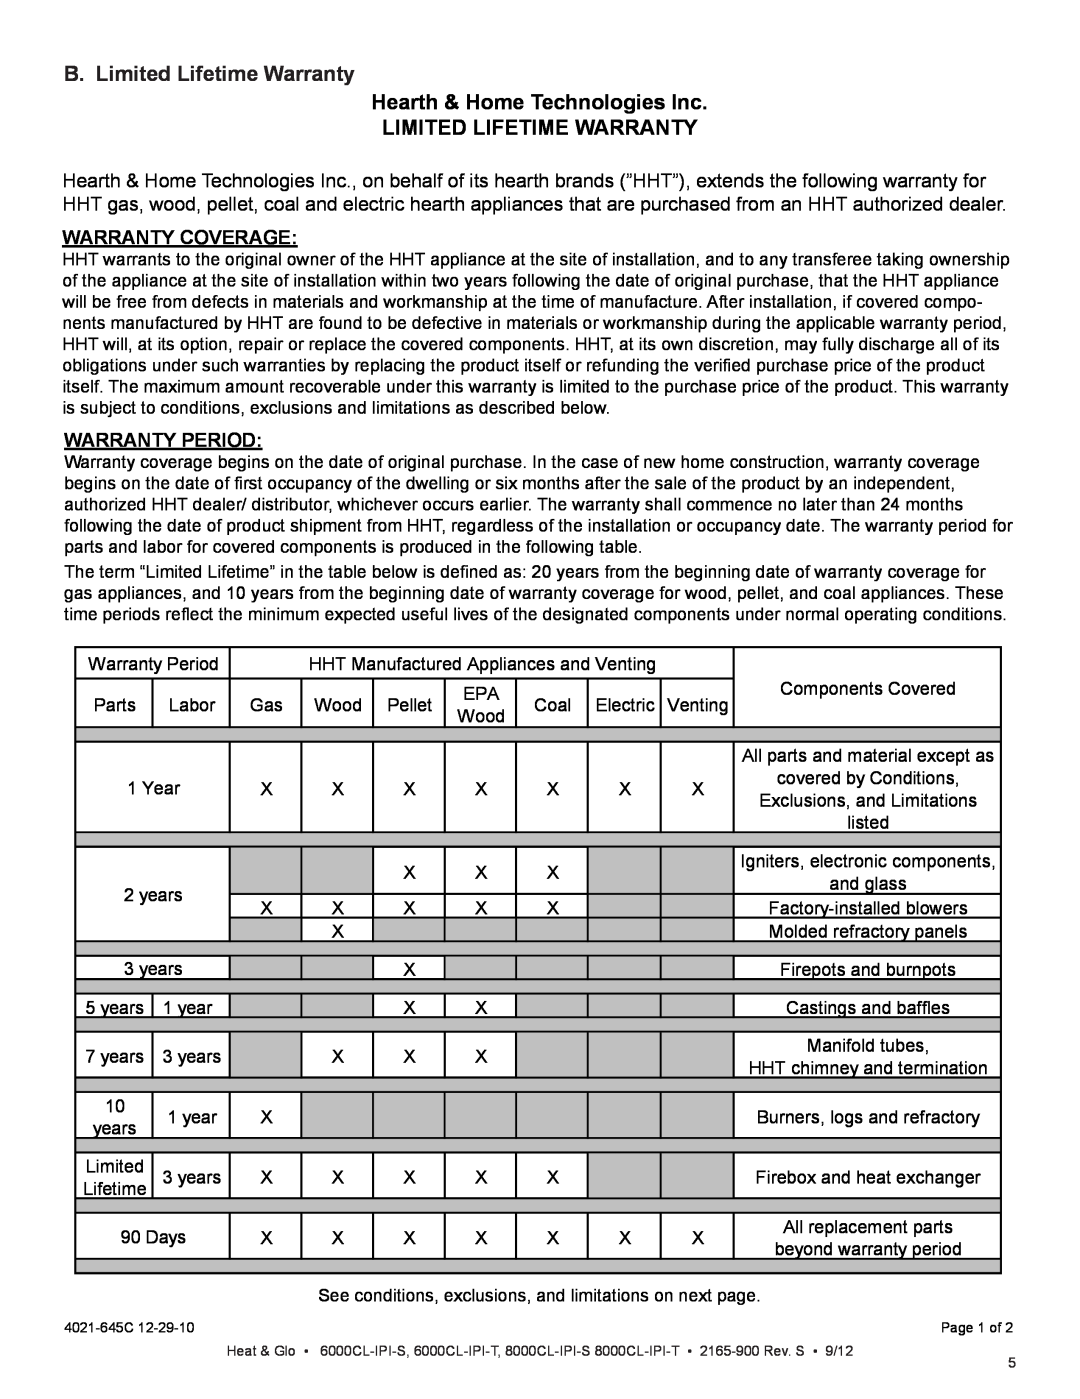 Heat & Glo LifeStyle 8000CL-IPI-T manual B. Limited Lifetime Warranty, Hearth & Home Technologies Inc, Warranty Coverage 